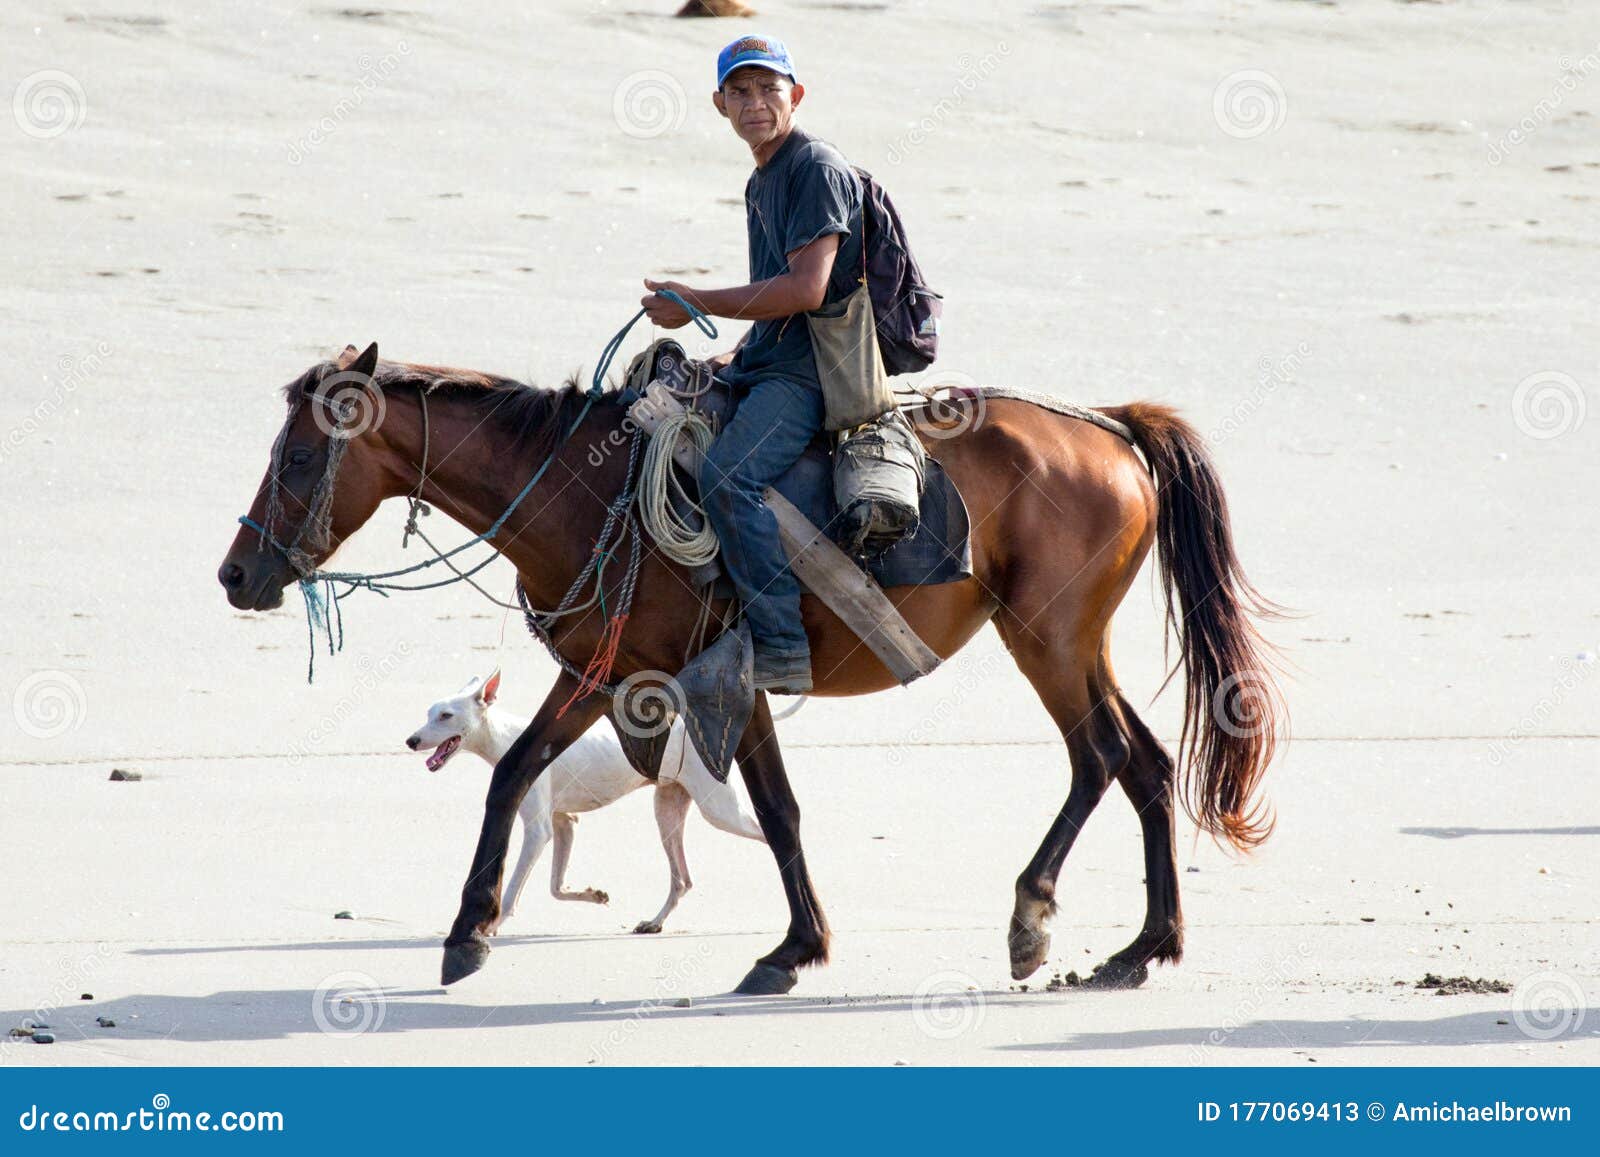 nicaraguan cowboy on horseback along a beach.